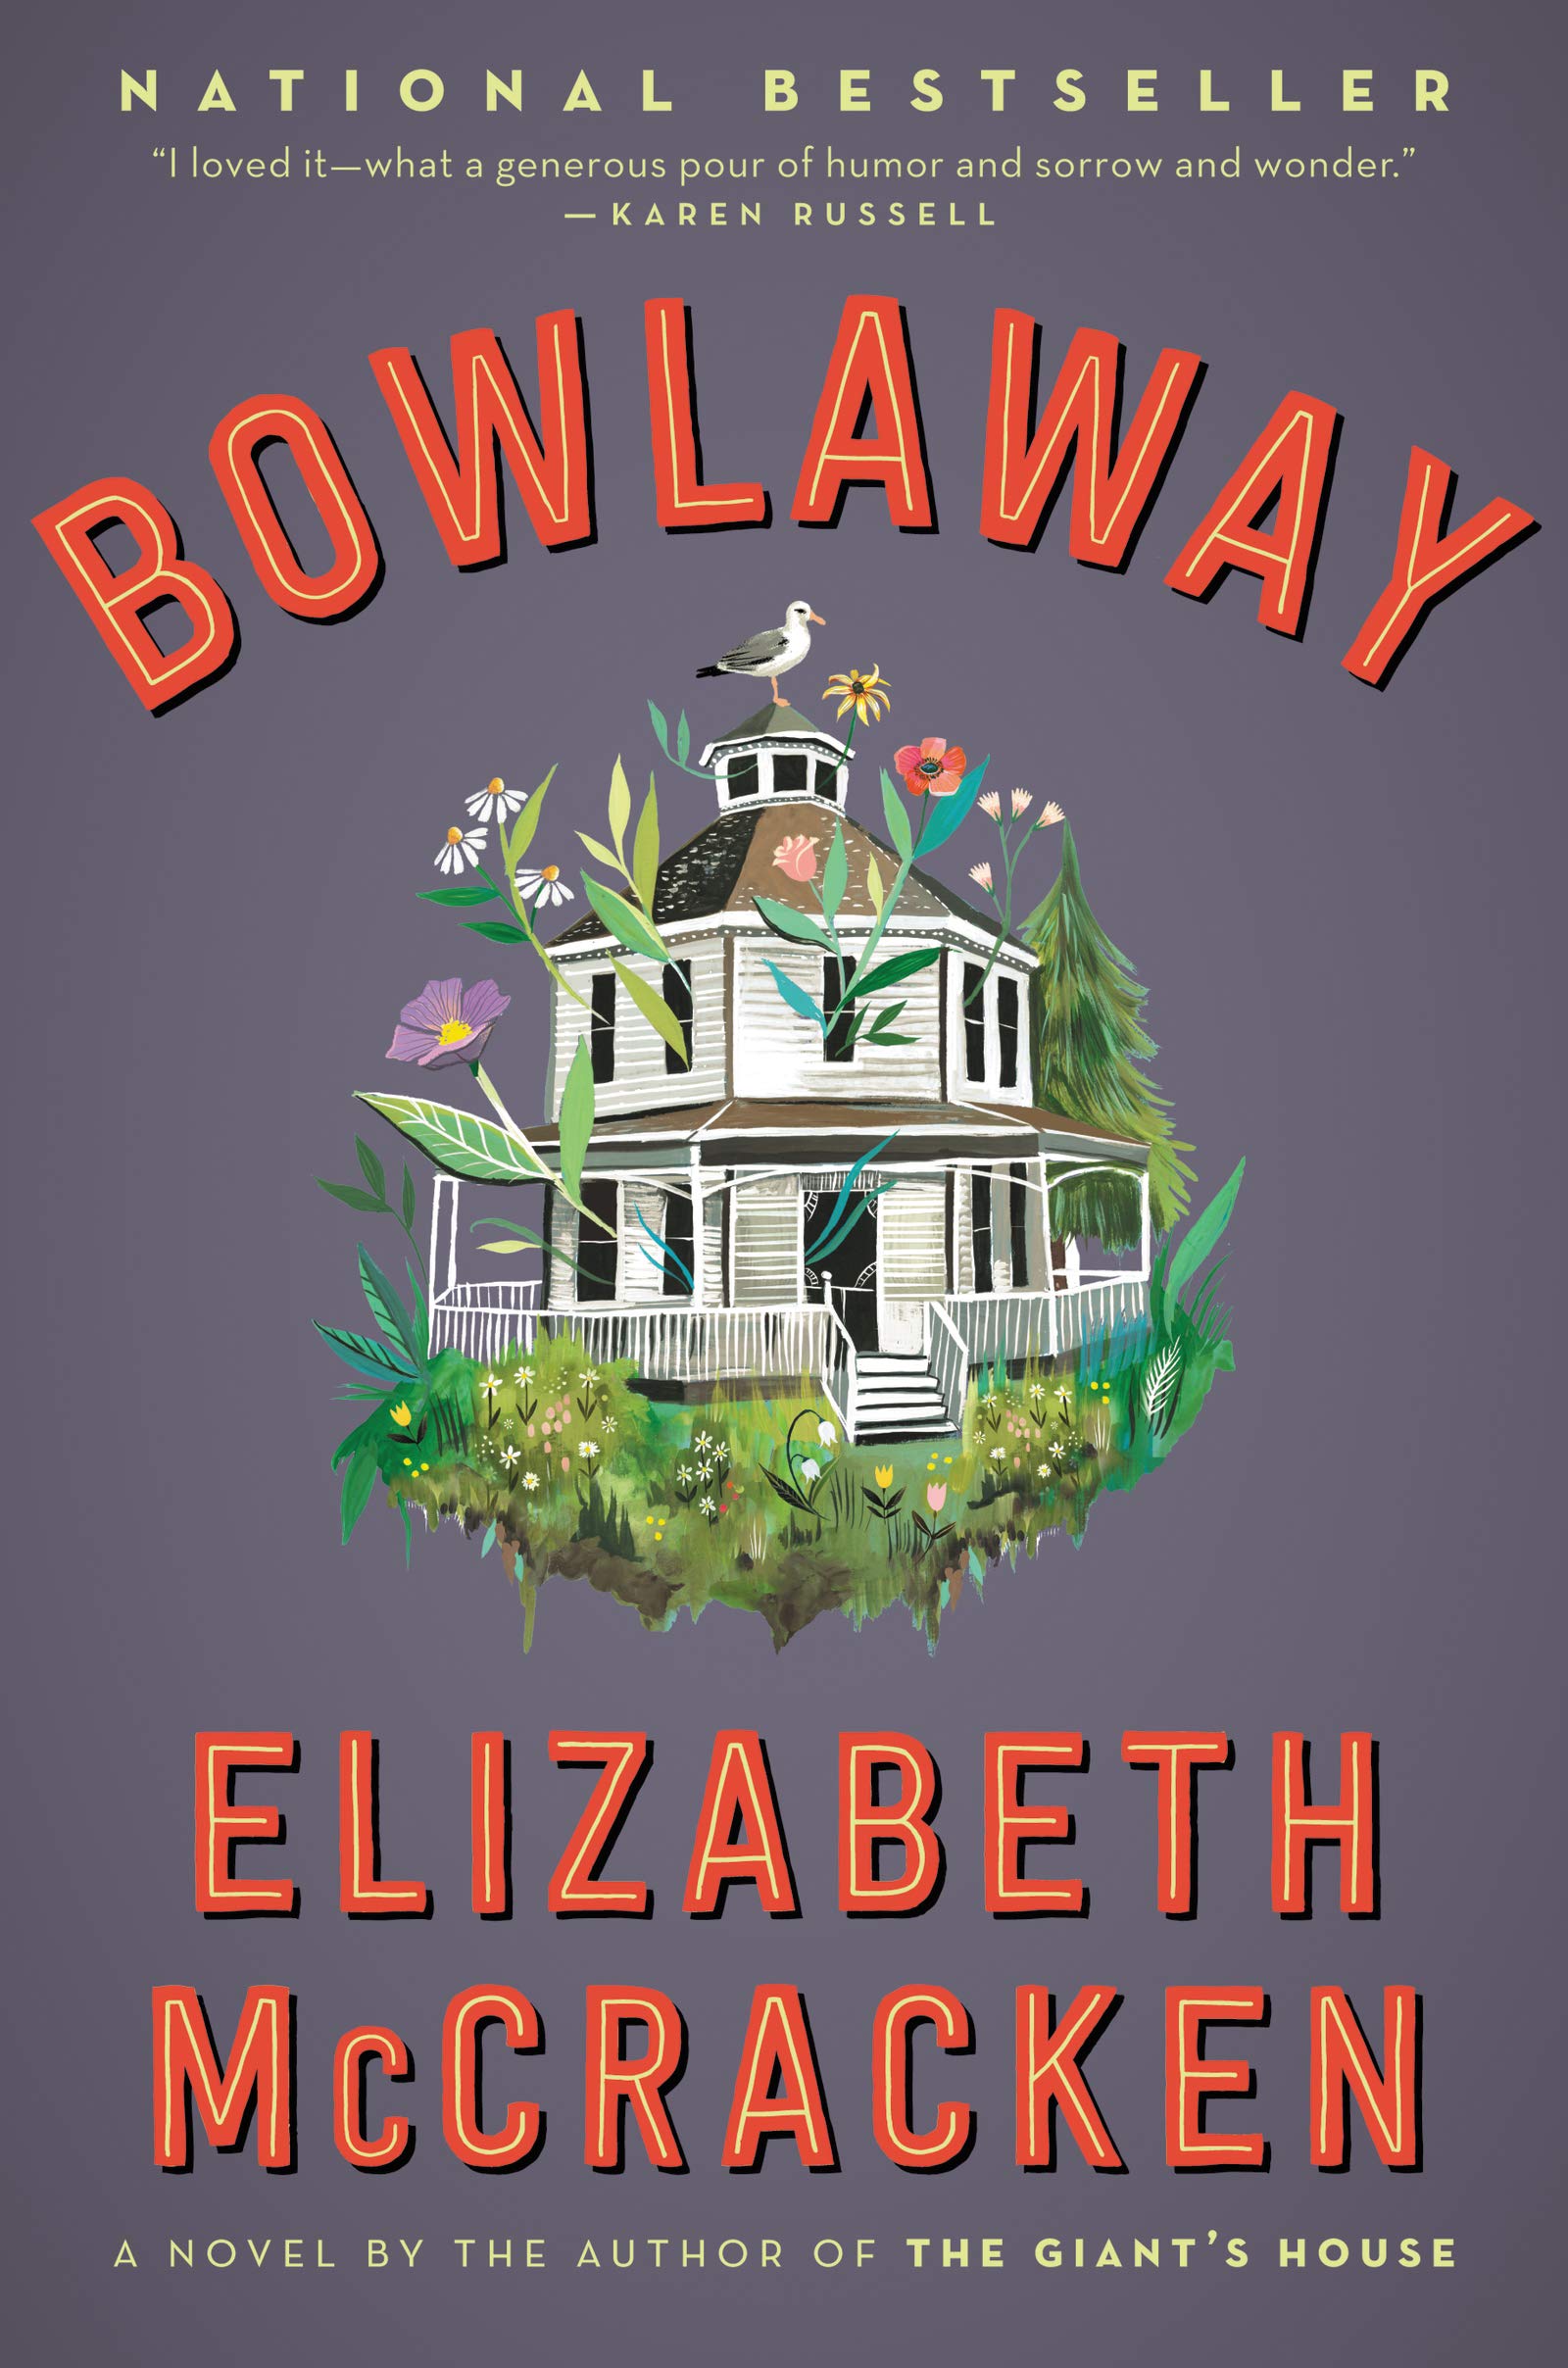 We will be discussing, Bowlaway by Elizabeth McCracken